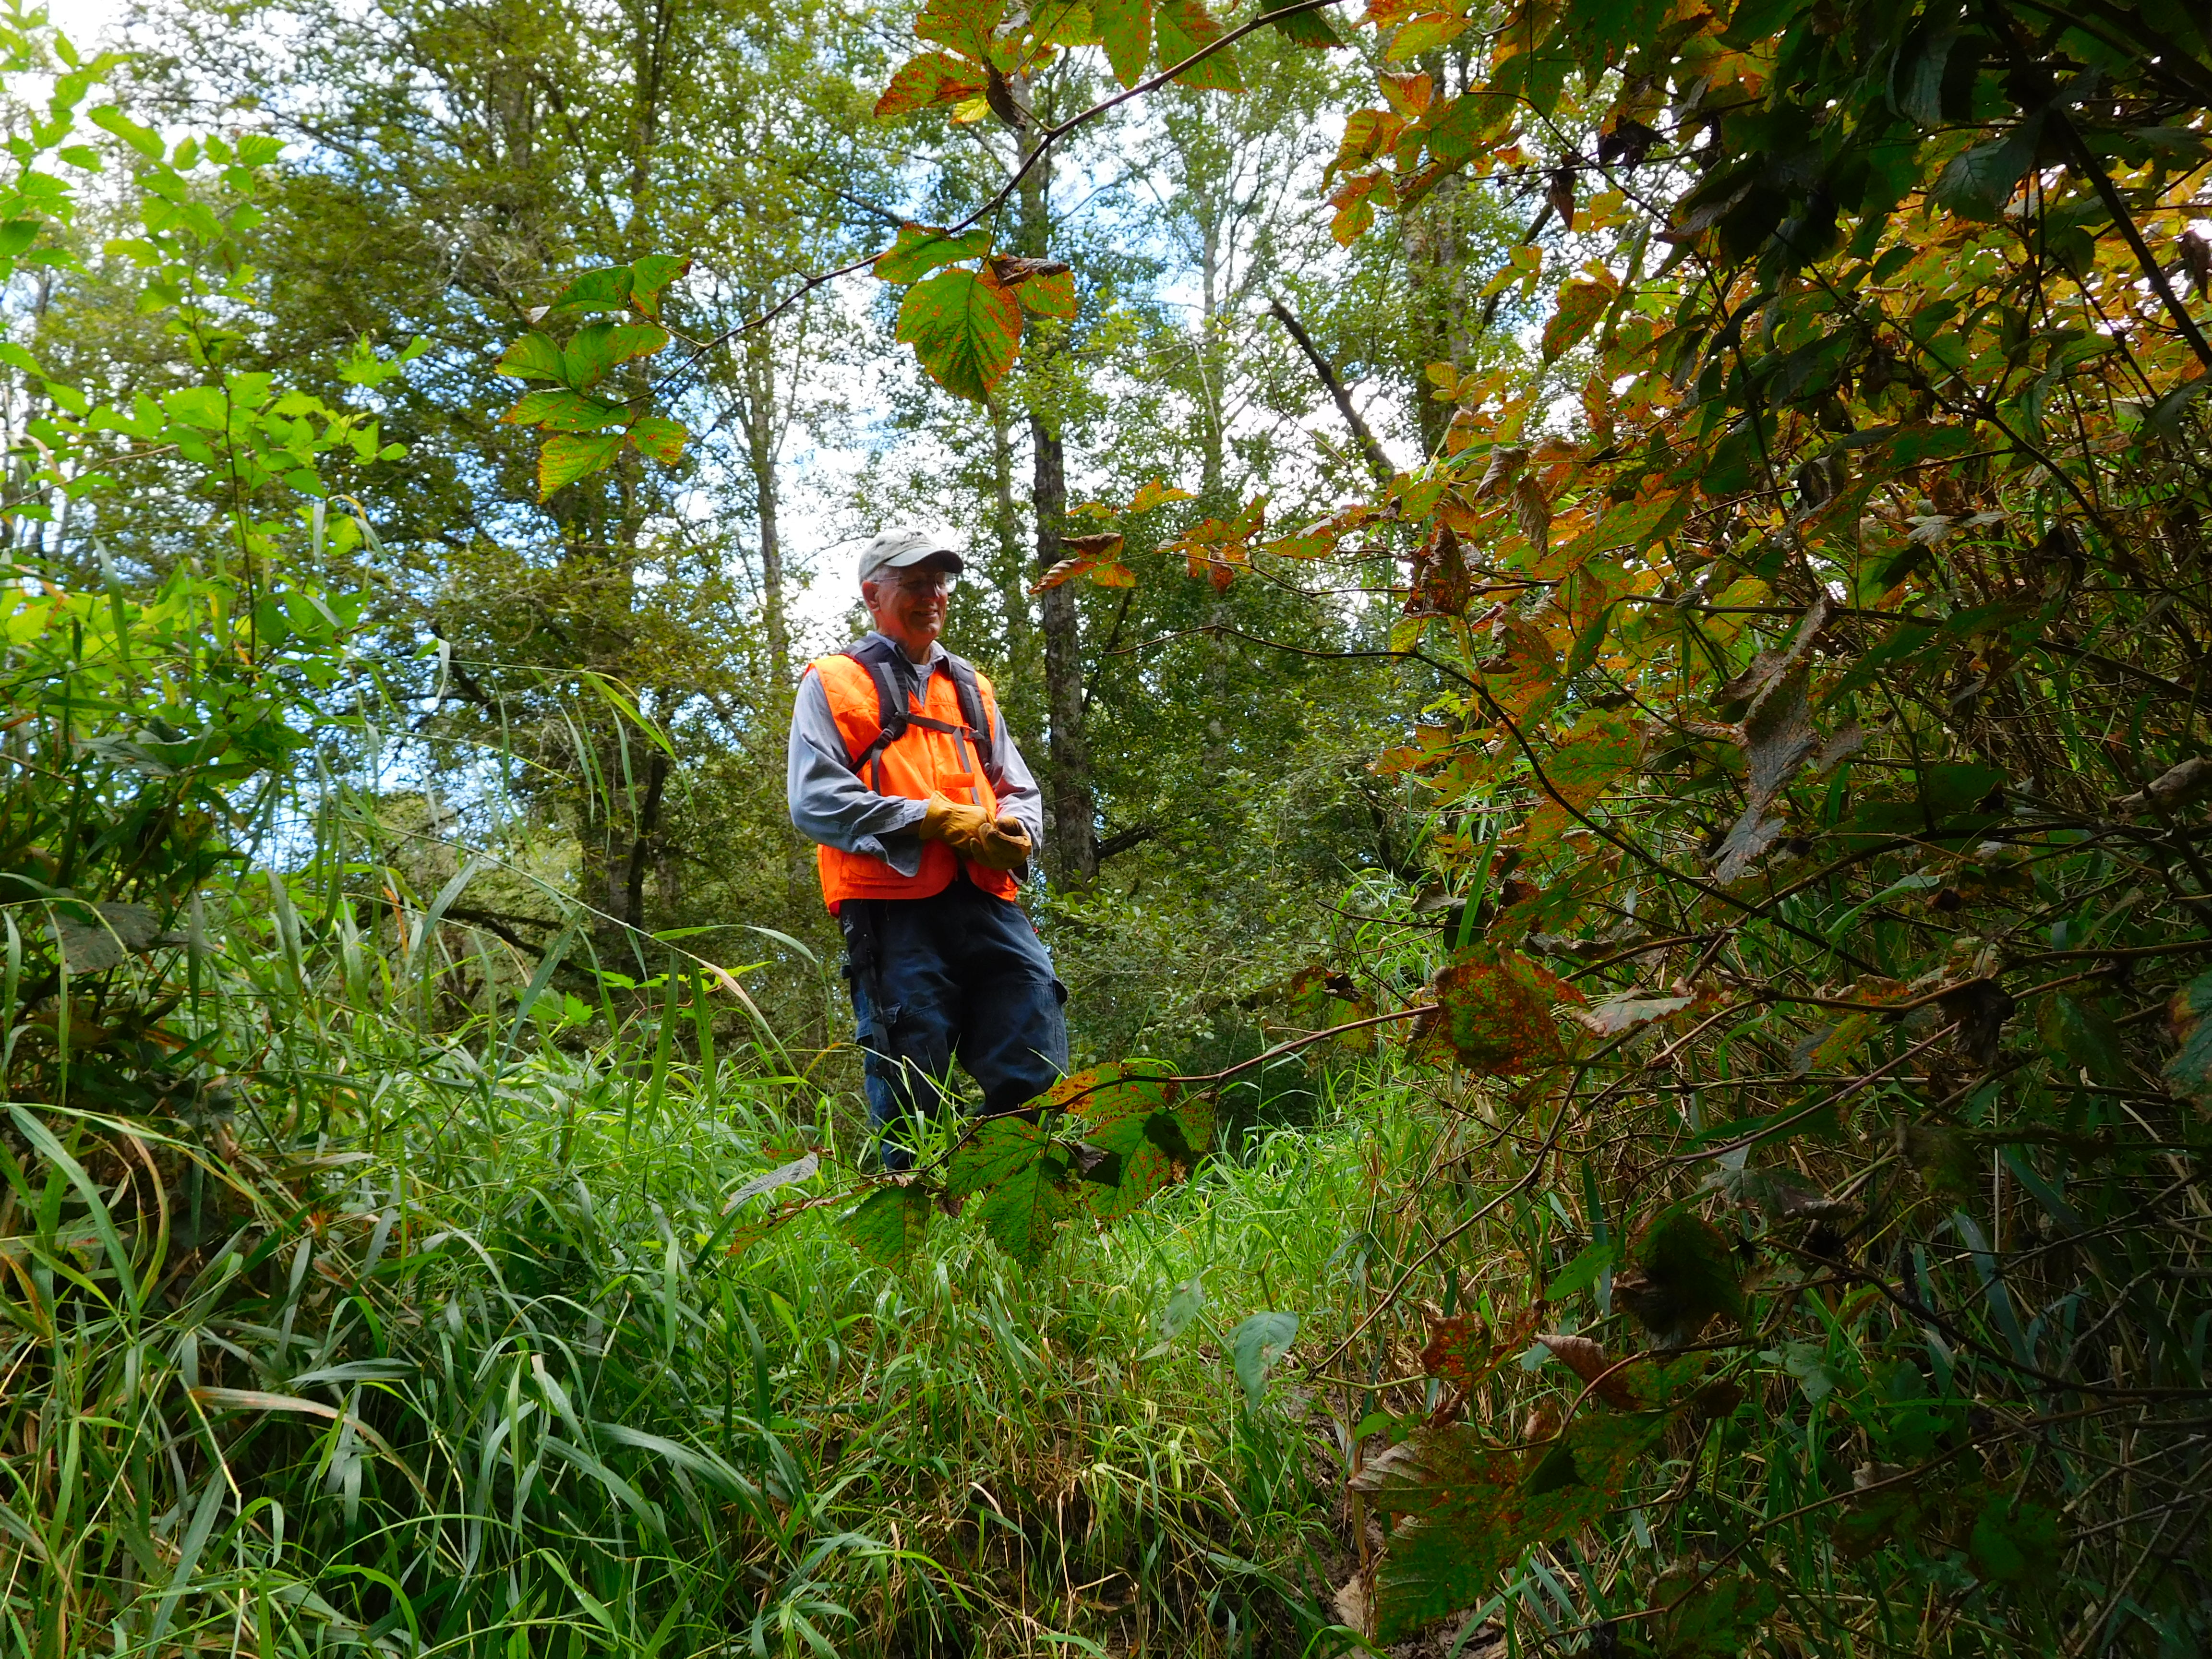 Volunteer land stewards are integral in managing Skagit Land Trust properties. Photograph credit: Skagit Land Trust staff.